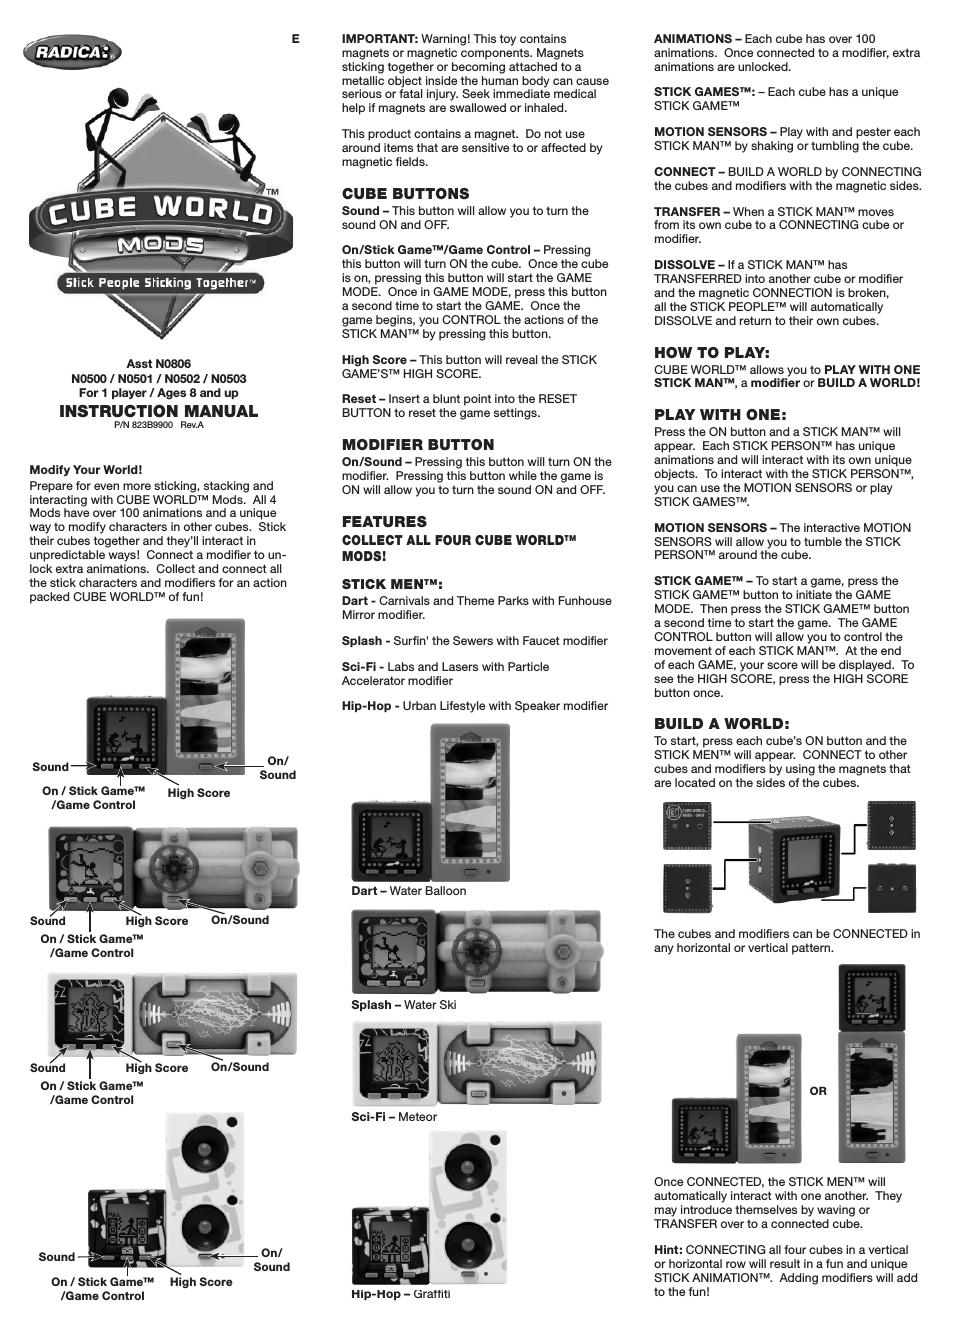 CUBE WORLD N0501